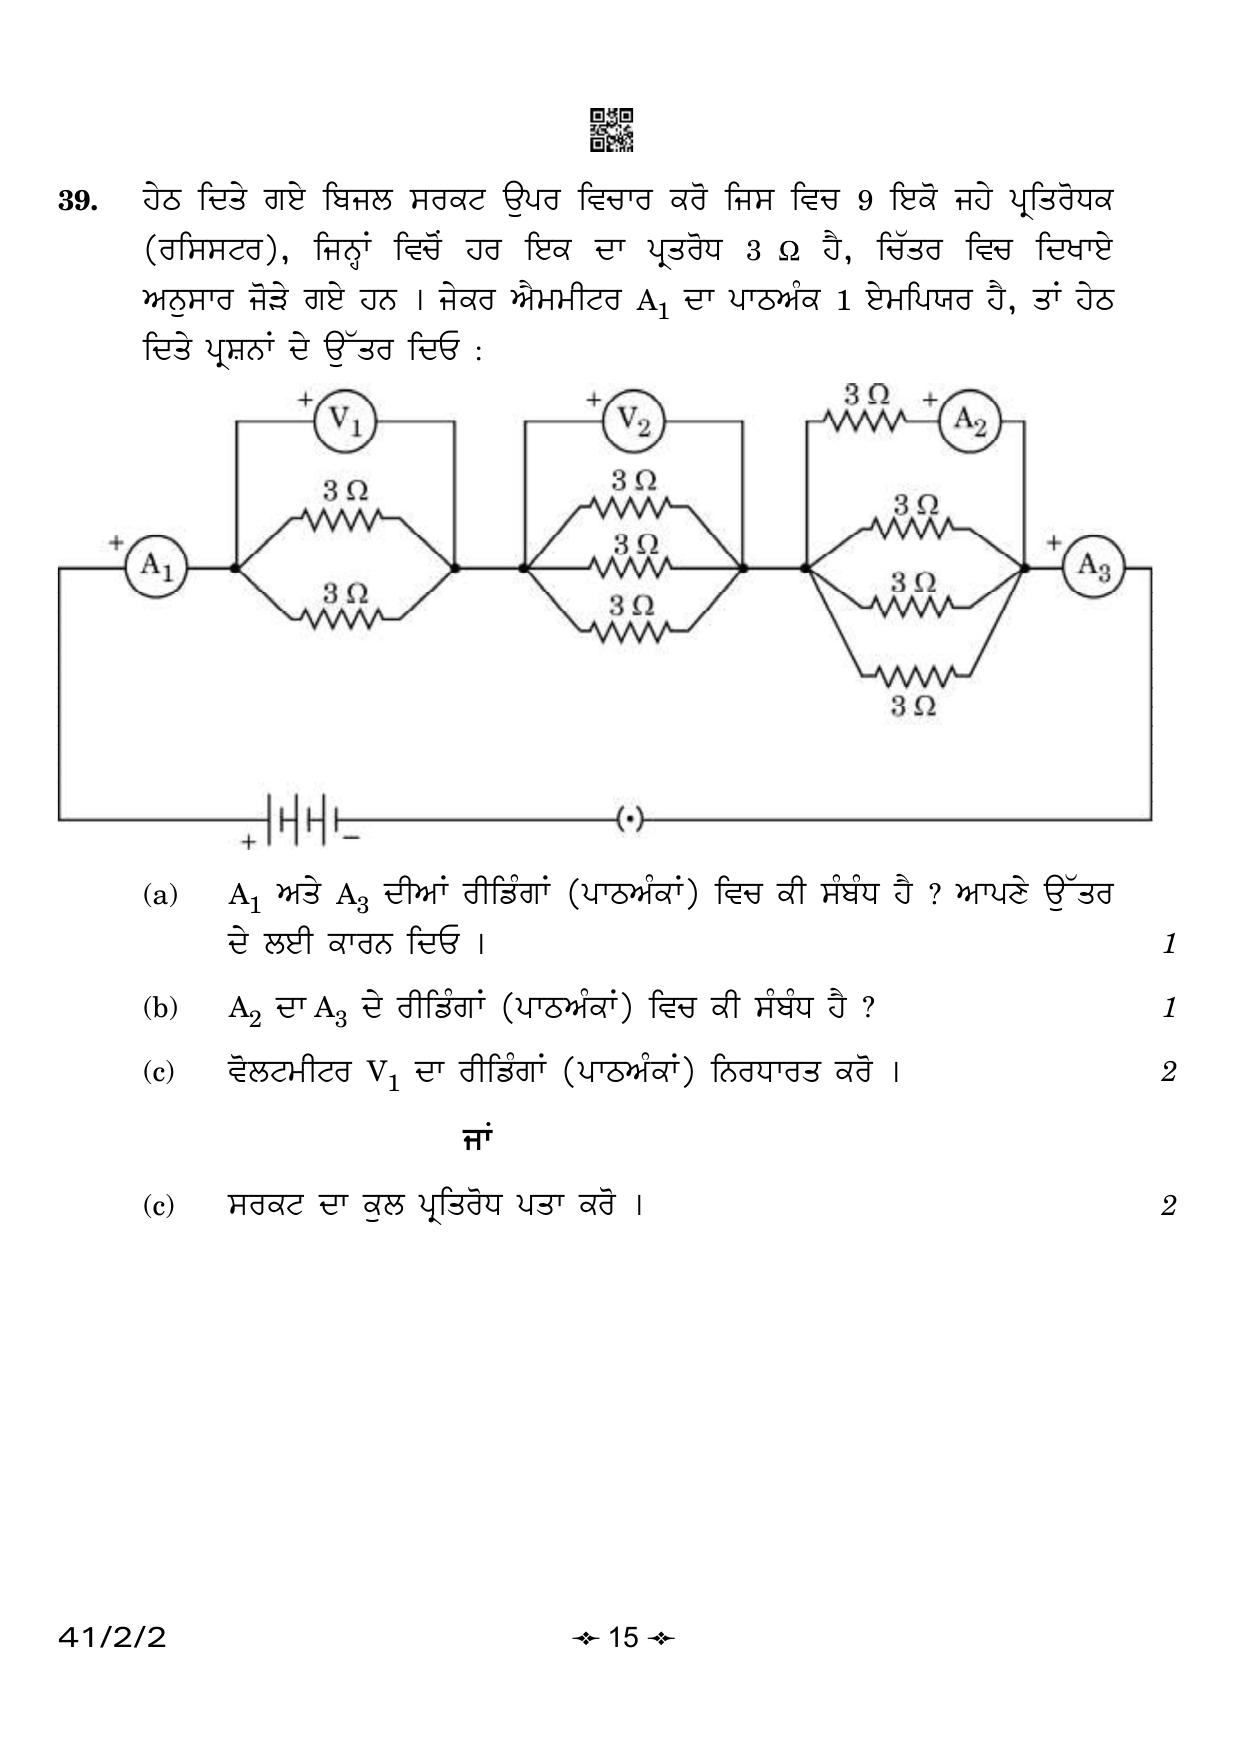 CBSE Class 10 41-2-2 Science Punjabi Version 2023 Question Paper - Page 15